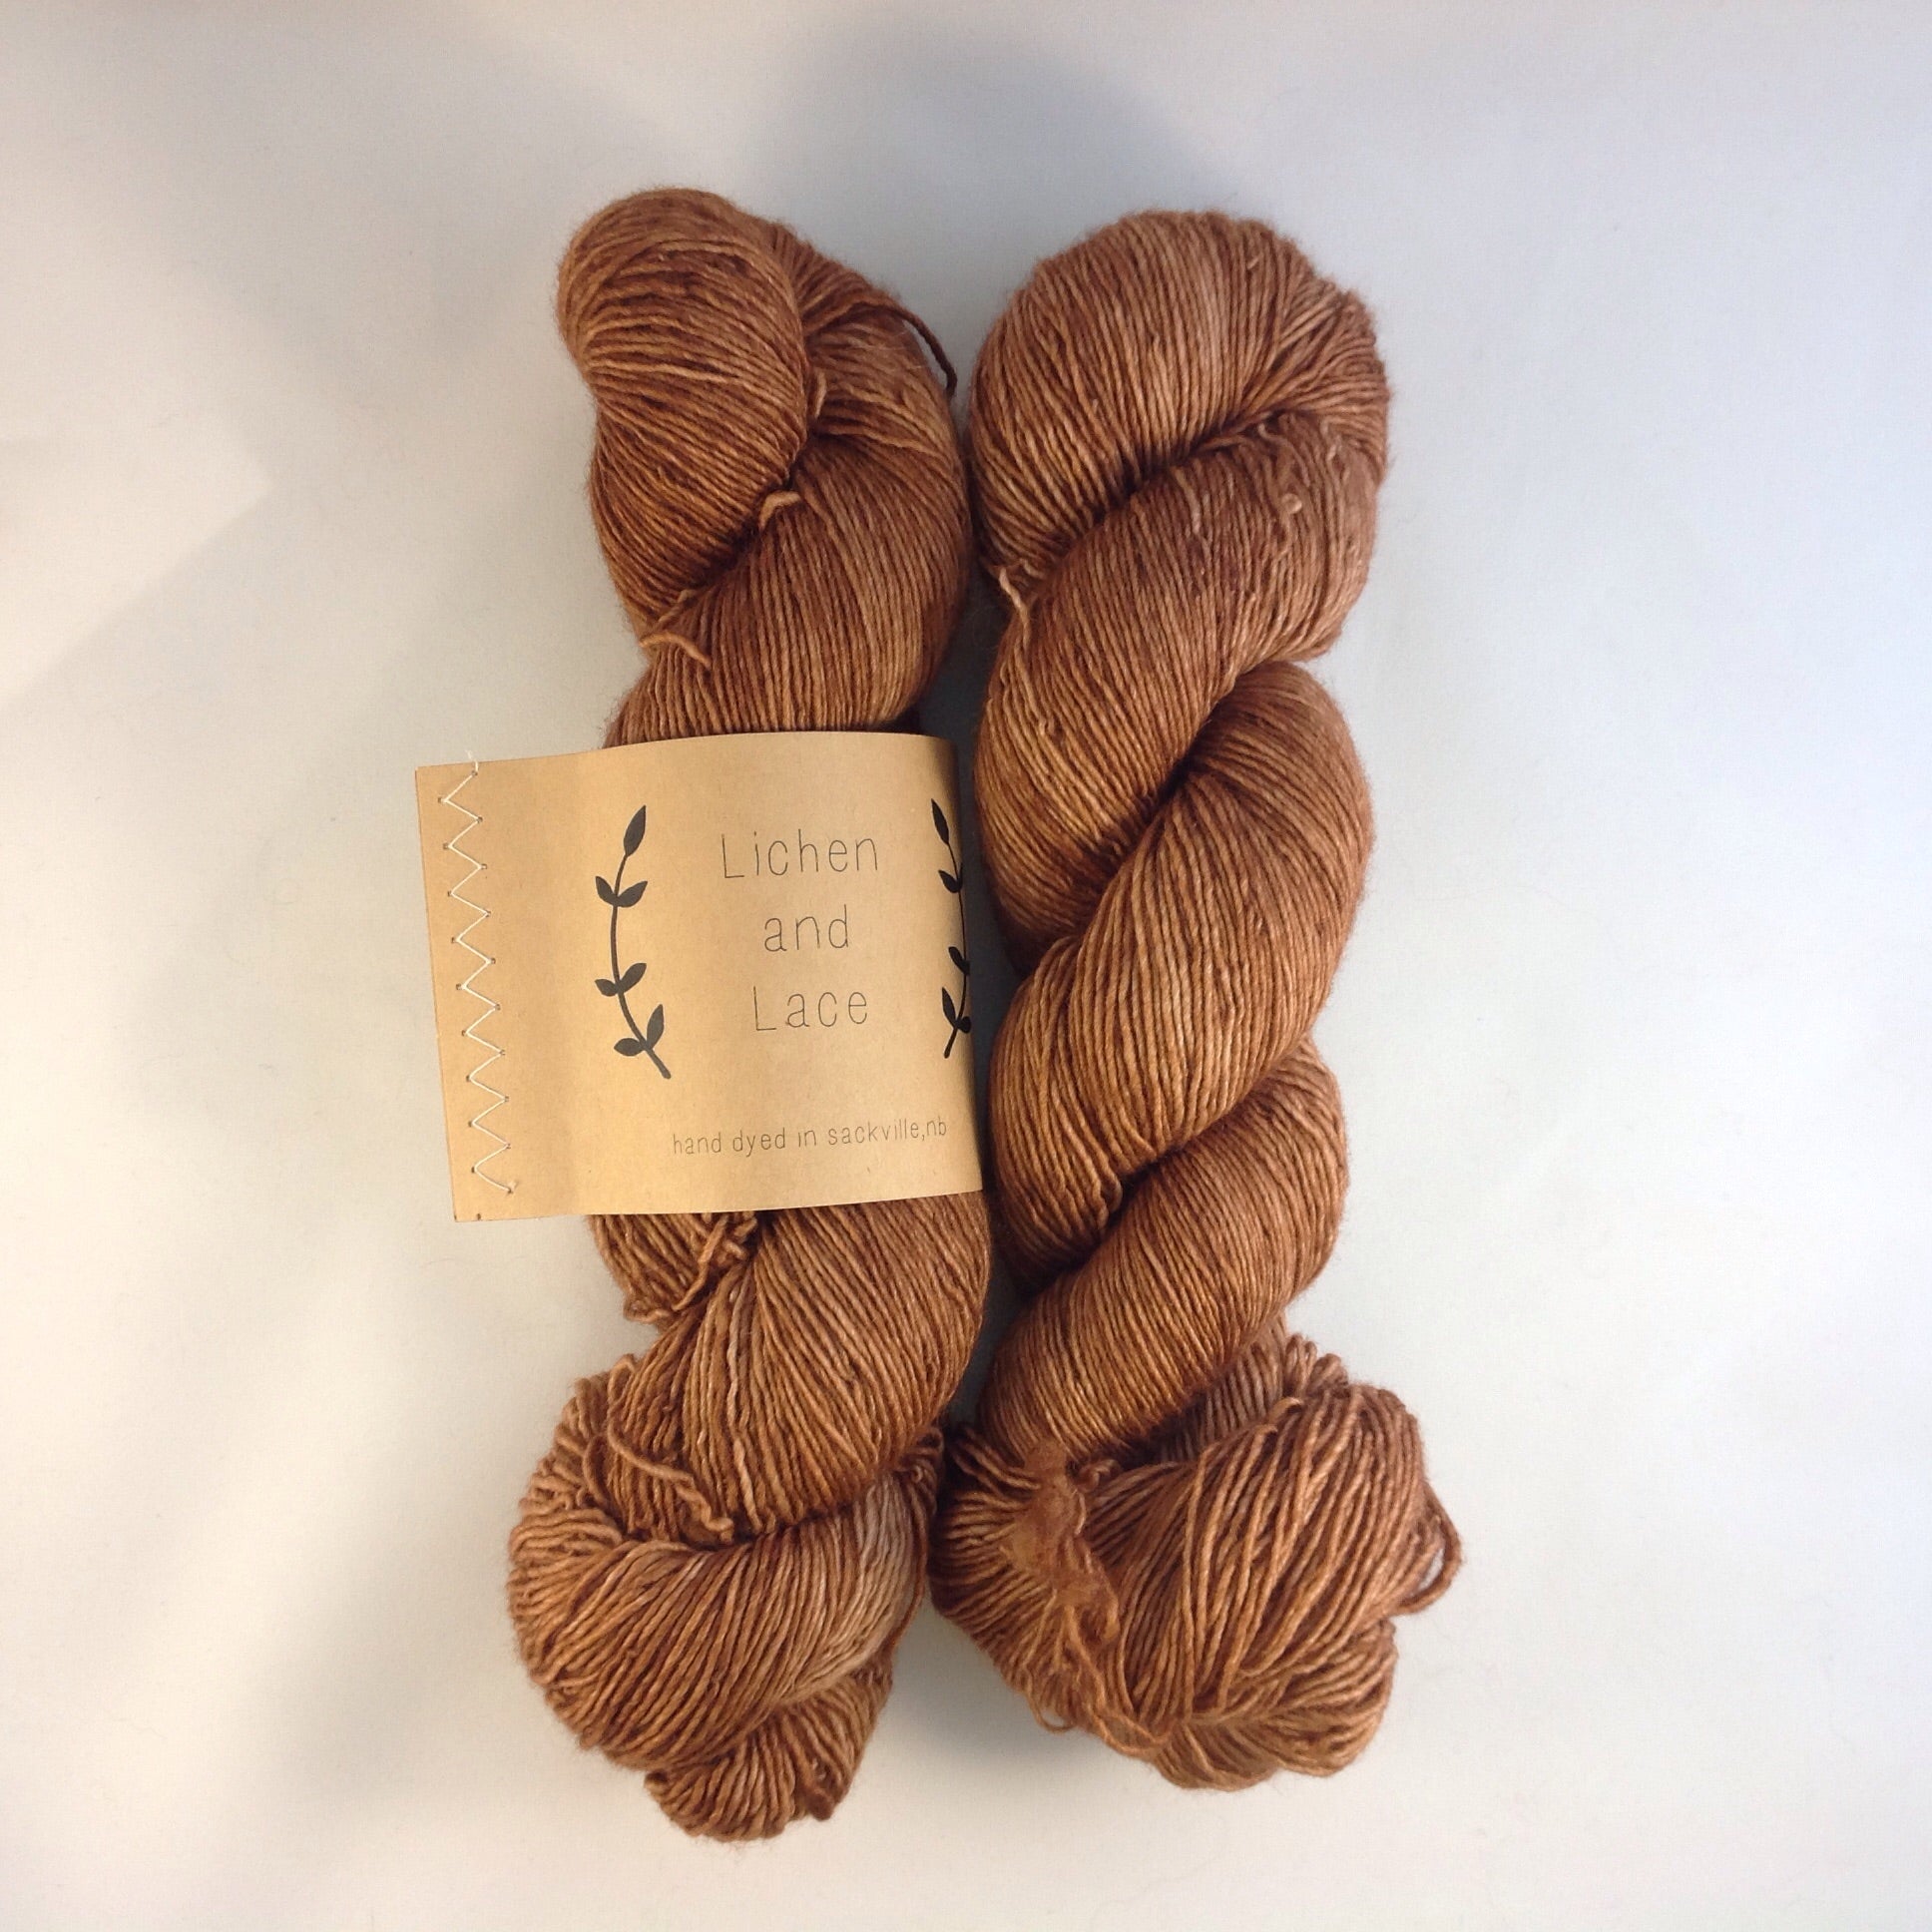 15 of the best merino wool yarns - Gathered